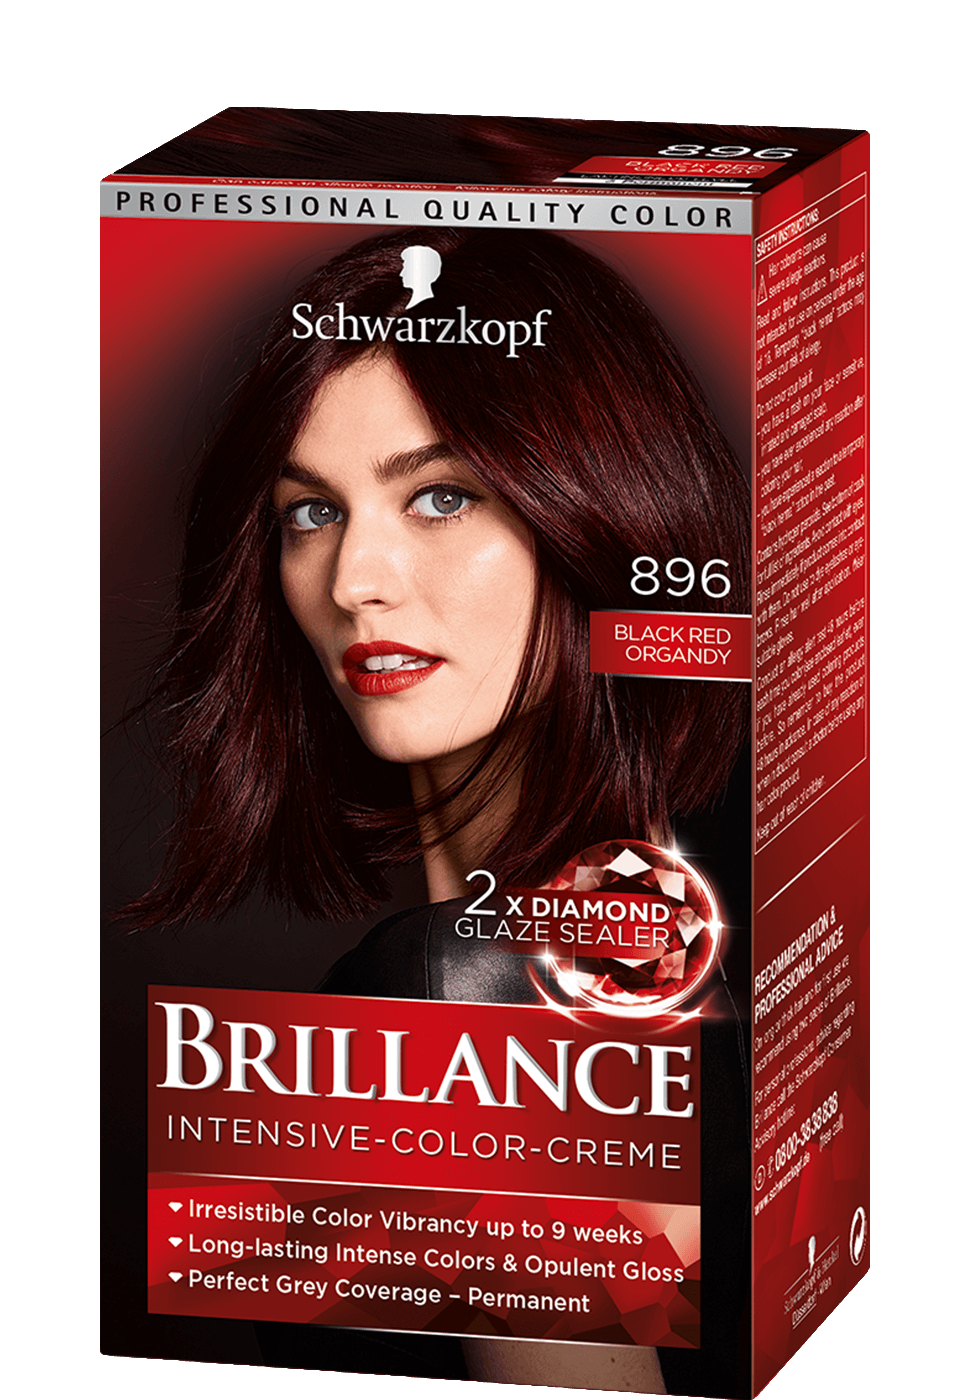 centeret Knurre champignon Black Red Organdy - Hair Color